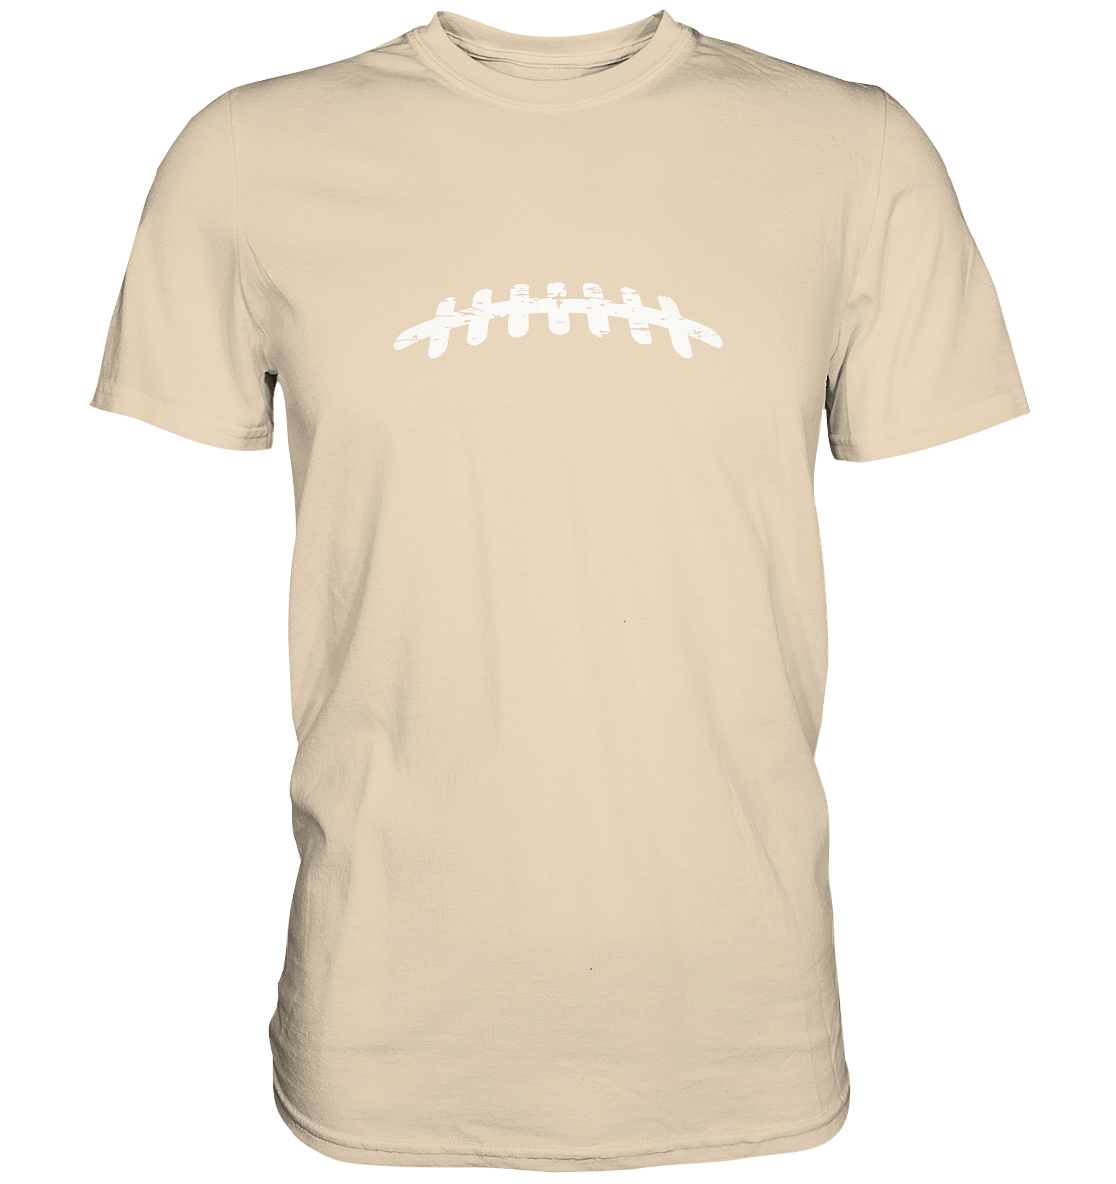 Footballnaht - Premium Shirt - Football Unity Football Unity